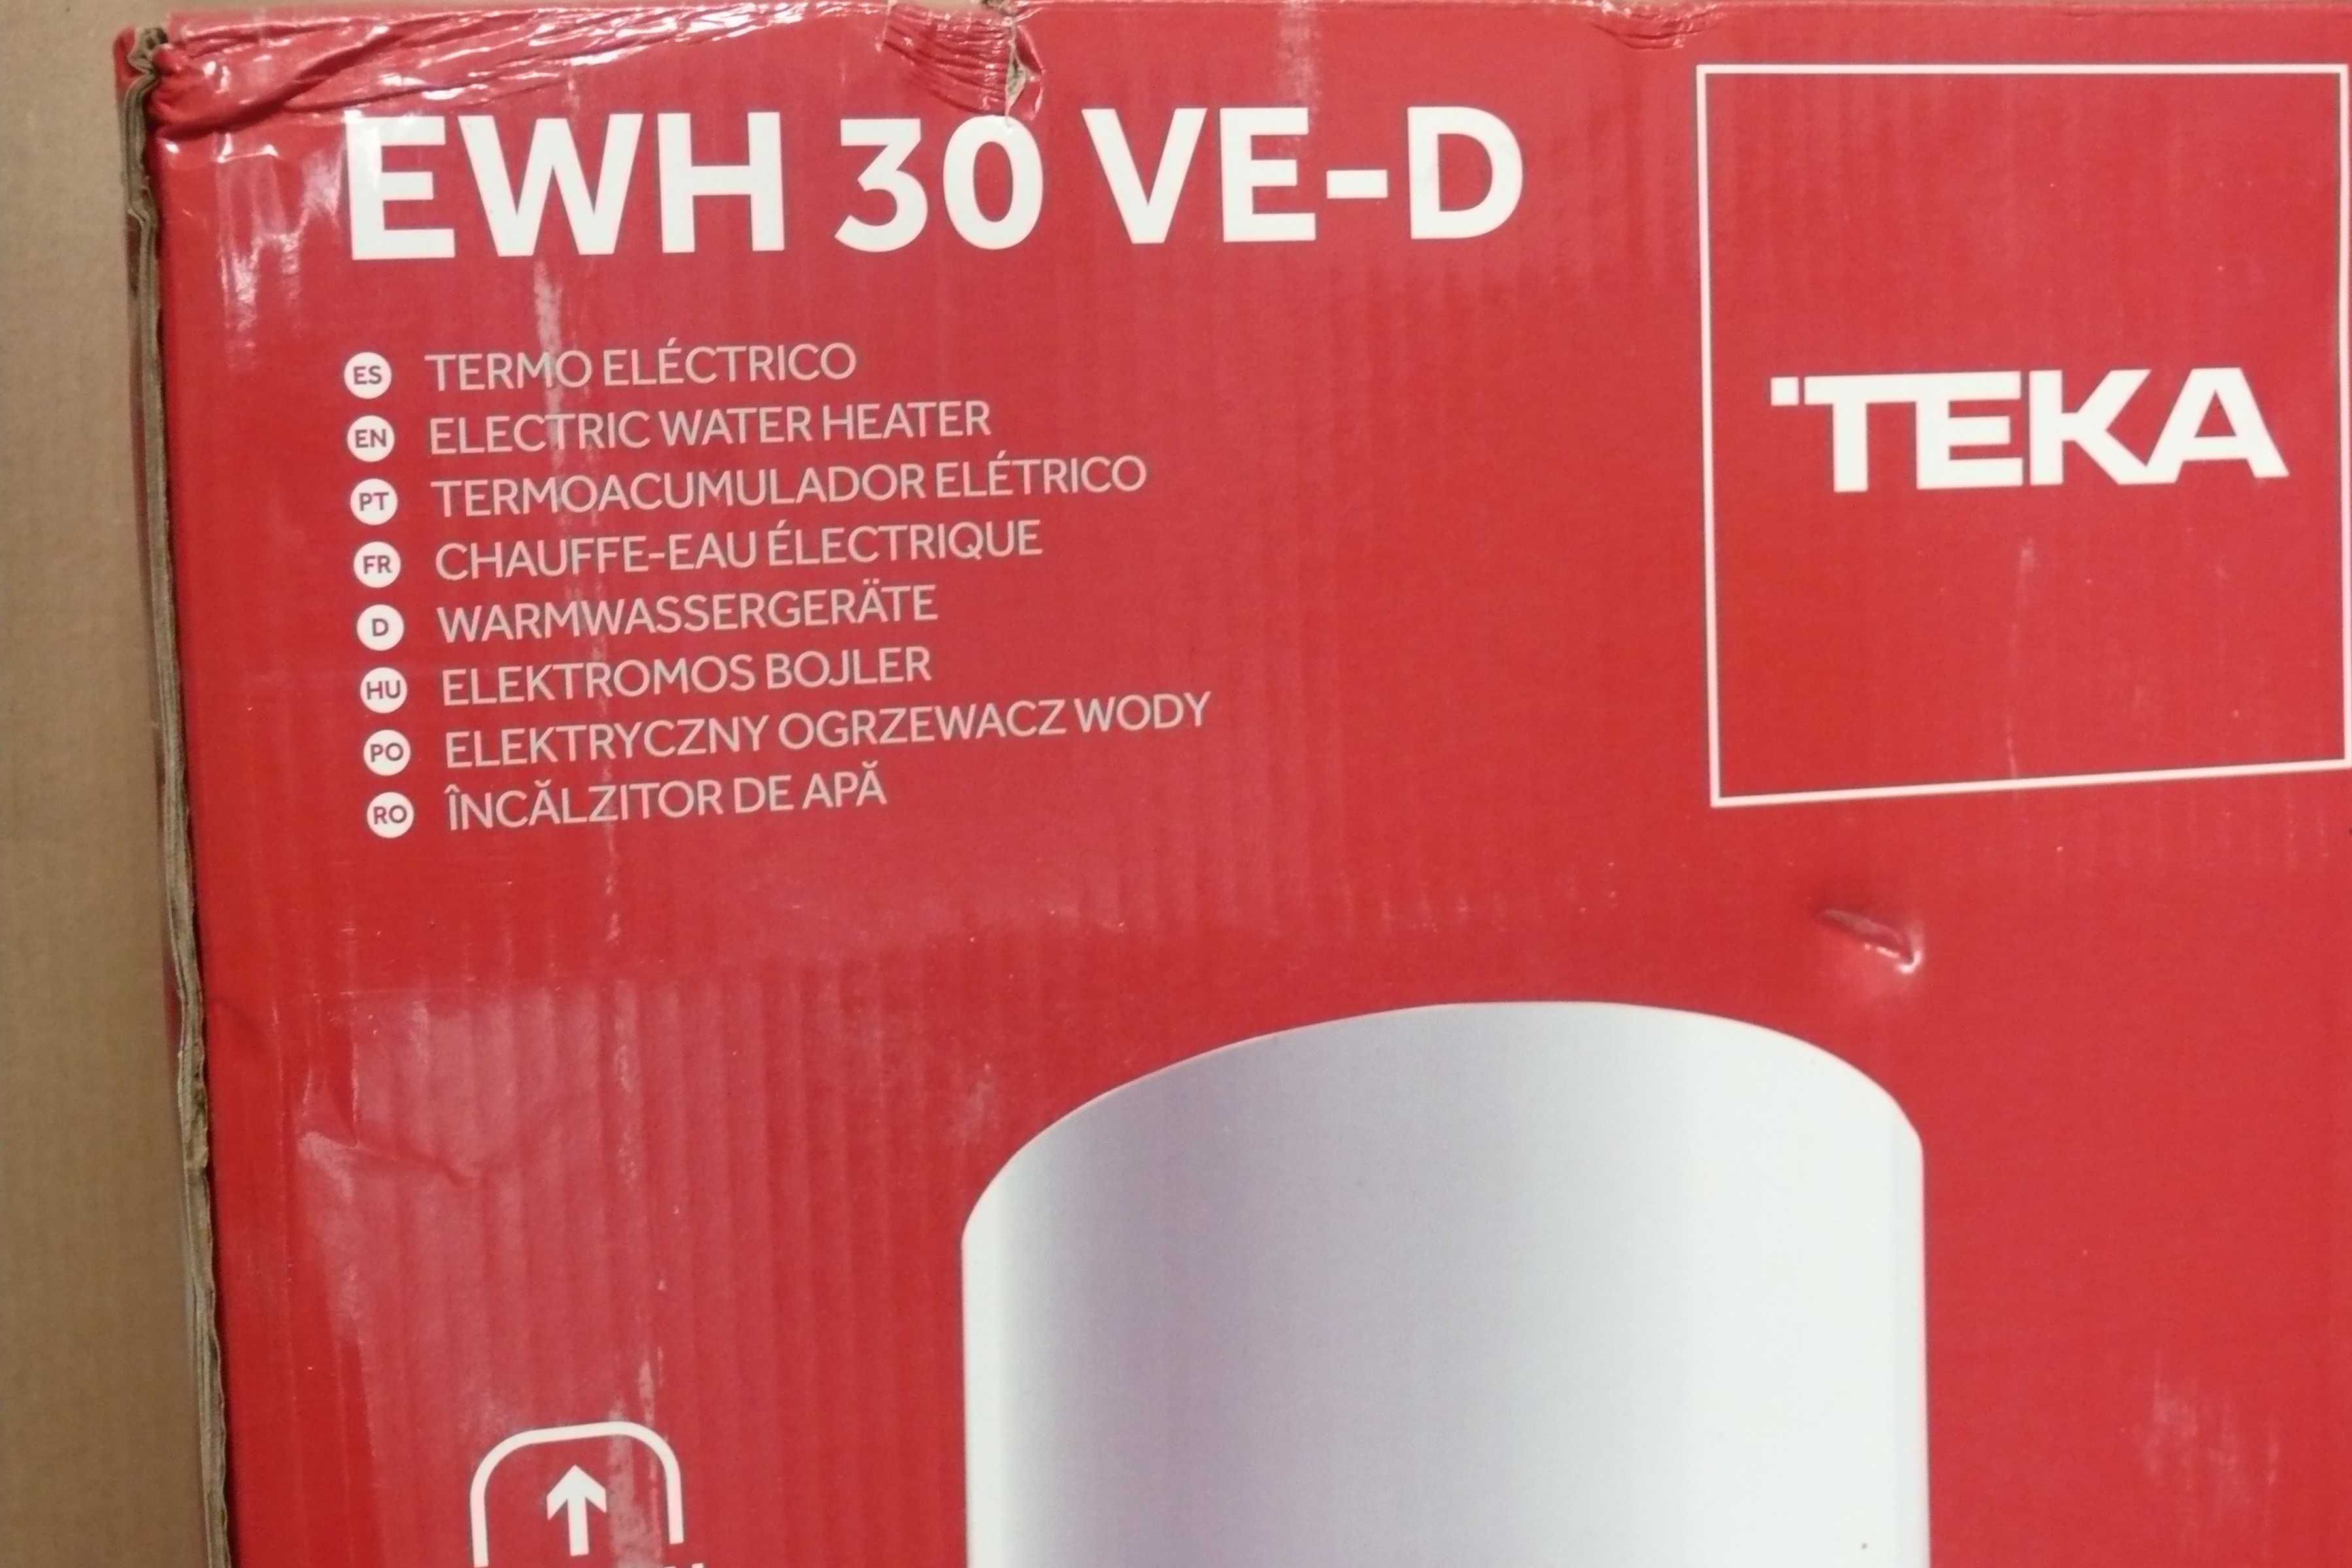 Termoacumulador Teka EWH 30 VE-D